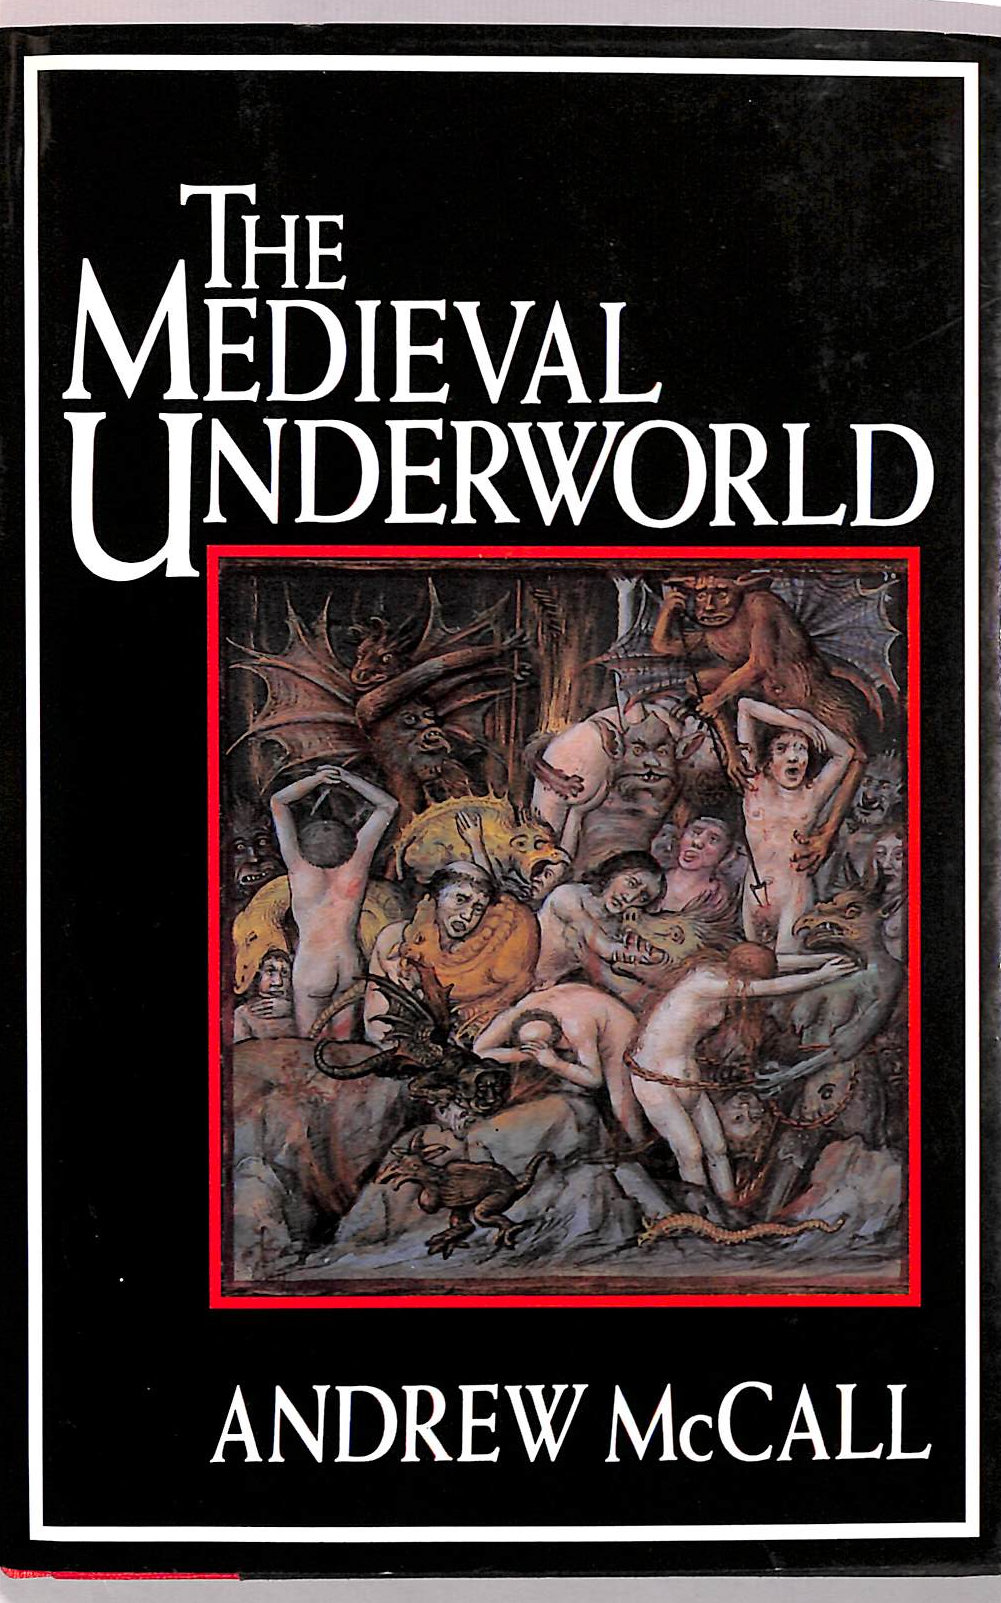 MCCALL, ANDREW - Mediaeval Underworld